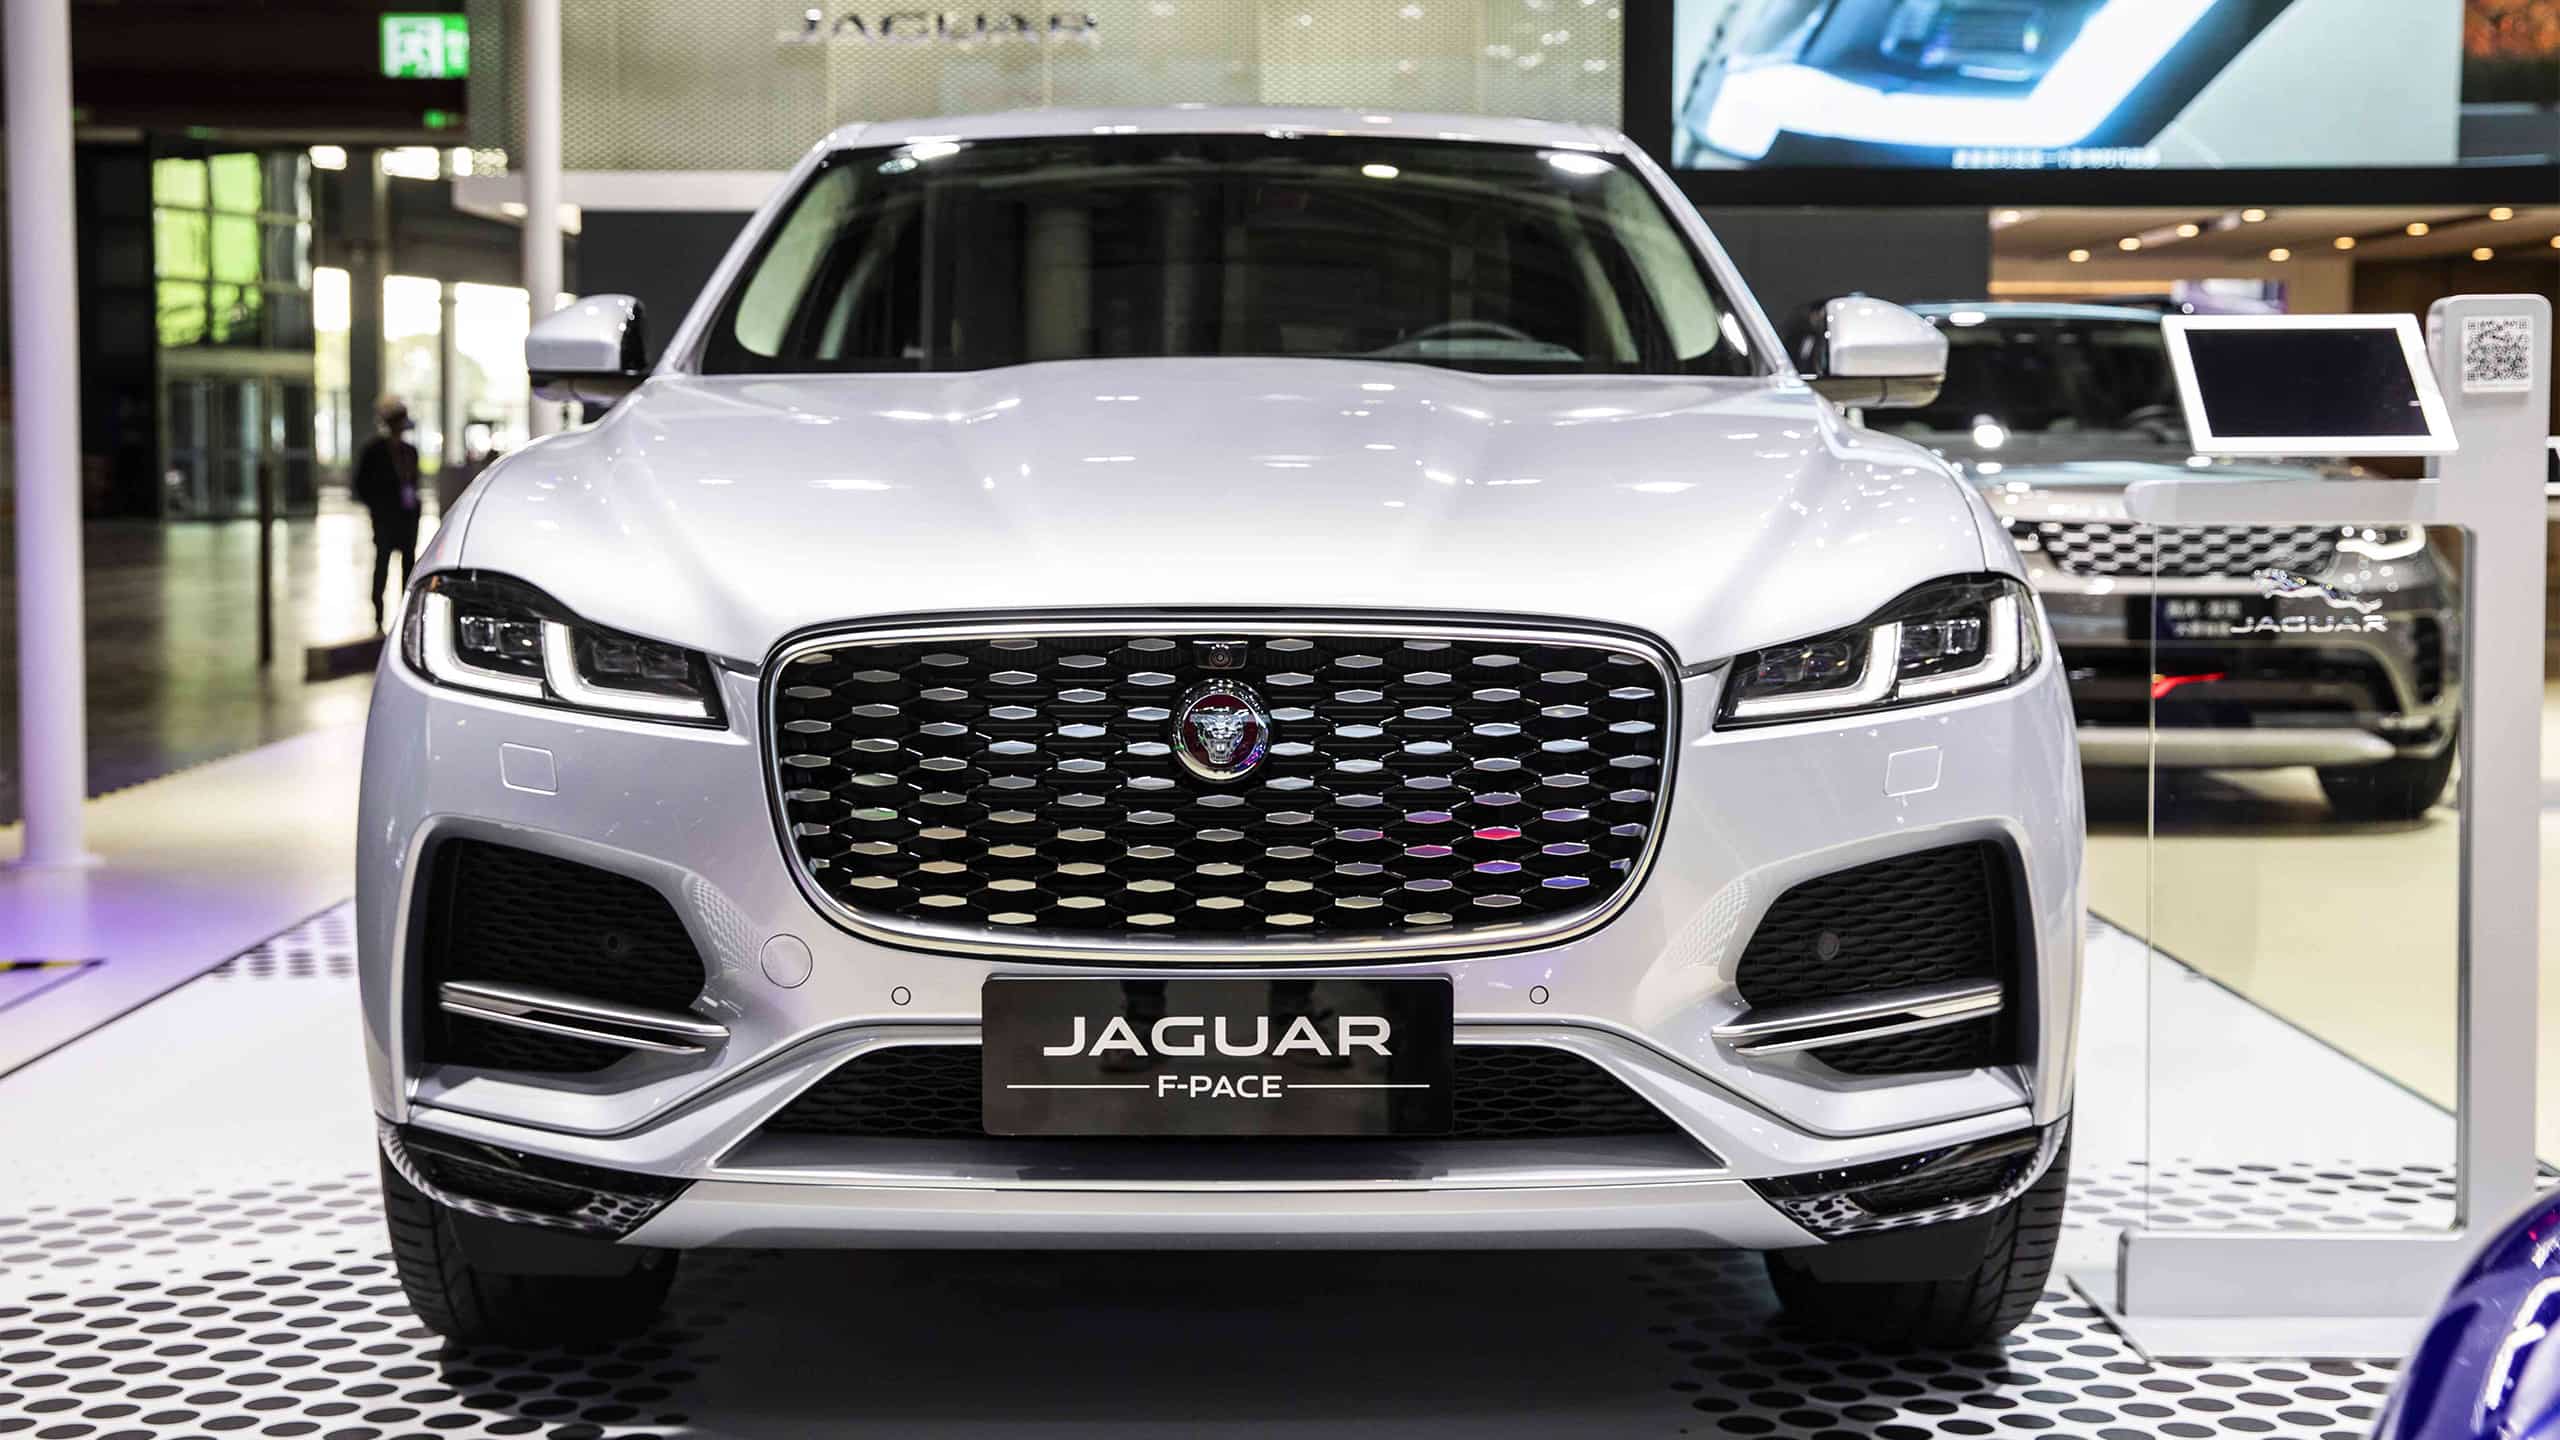 Jaguar F-FACE in the Auto Expo